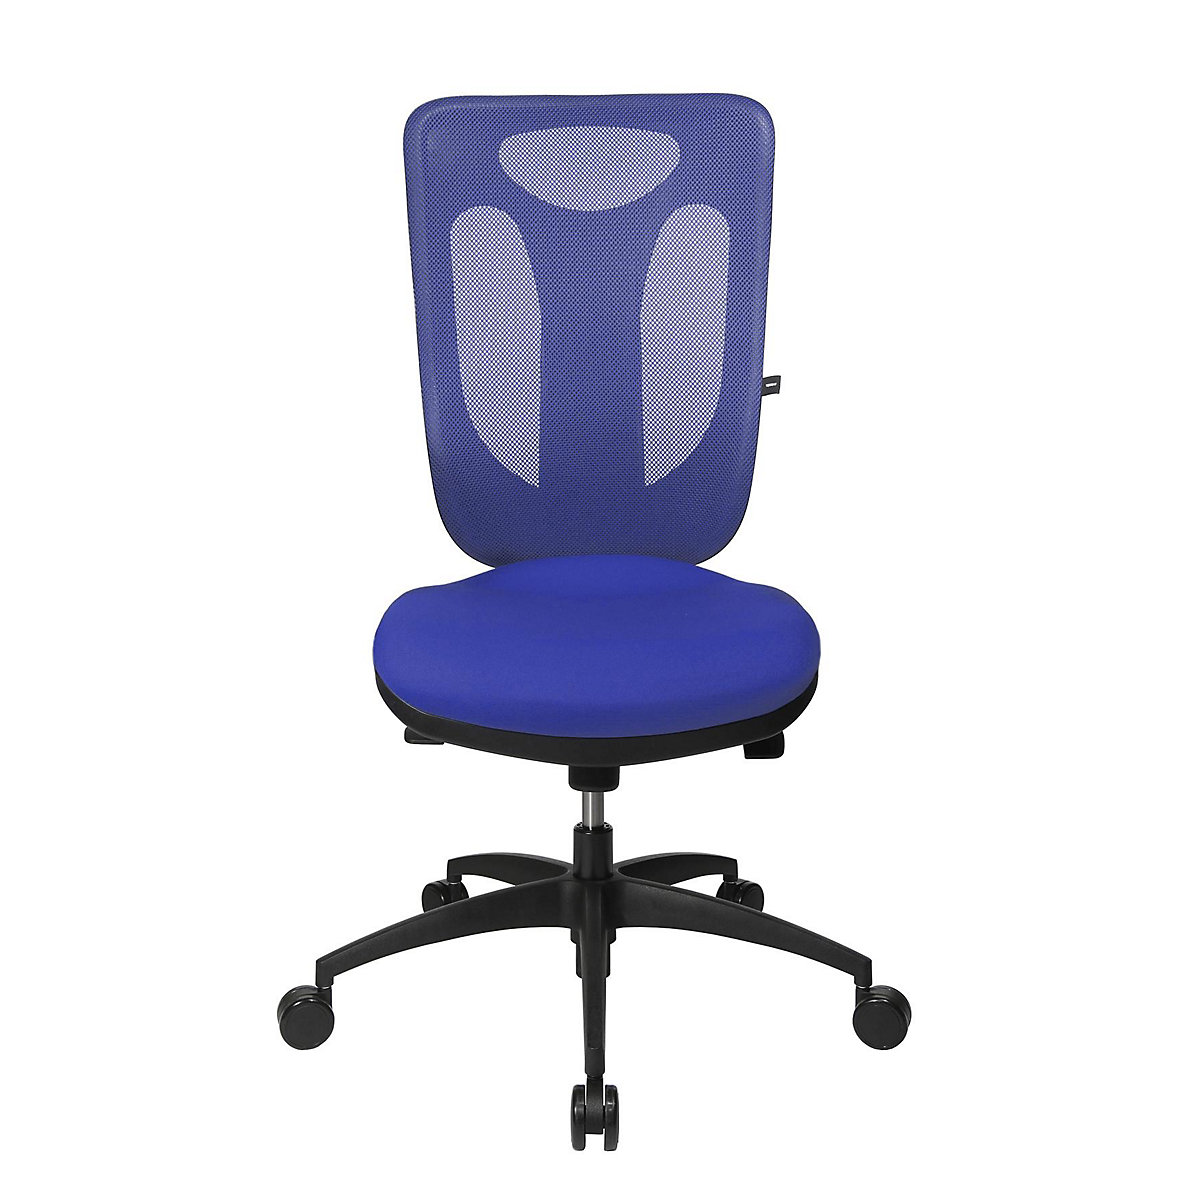 Ergonomic swivel chair, synchronous mechanism, ergonomic seat - Topstar